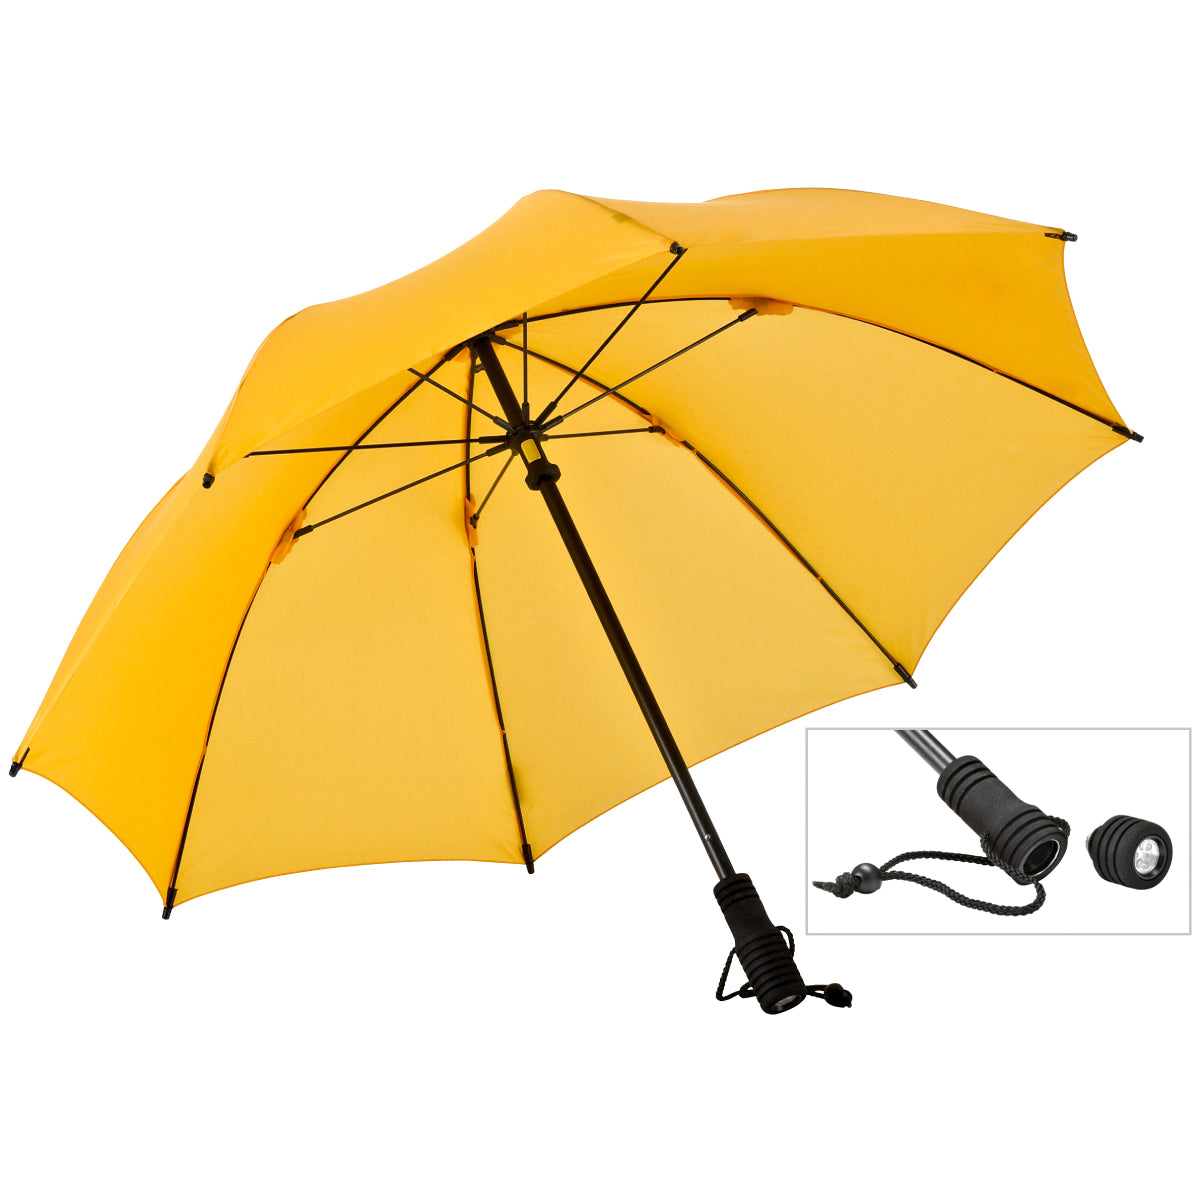 Flashlite Umbrella Swing EuroSCHIRM USA – EuroSCHIRM